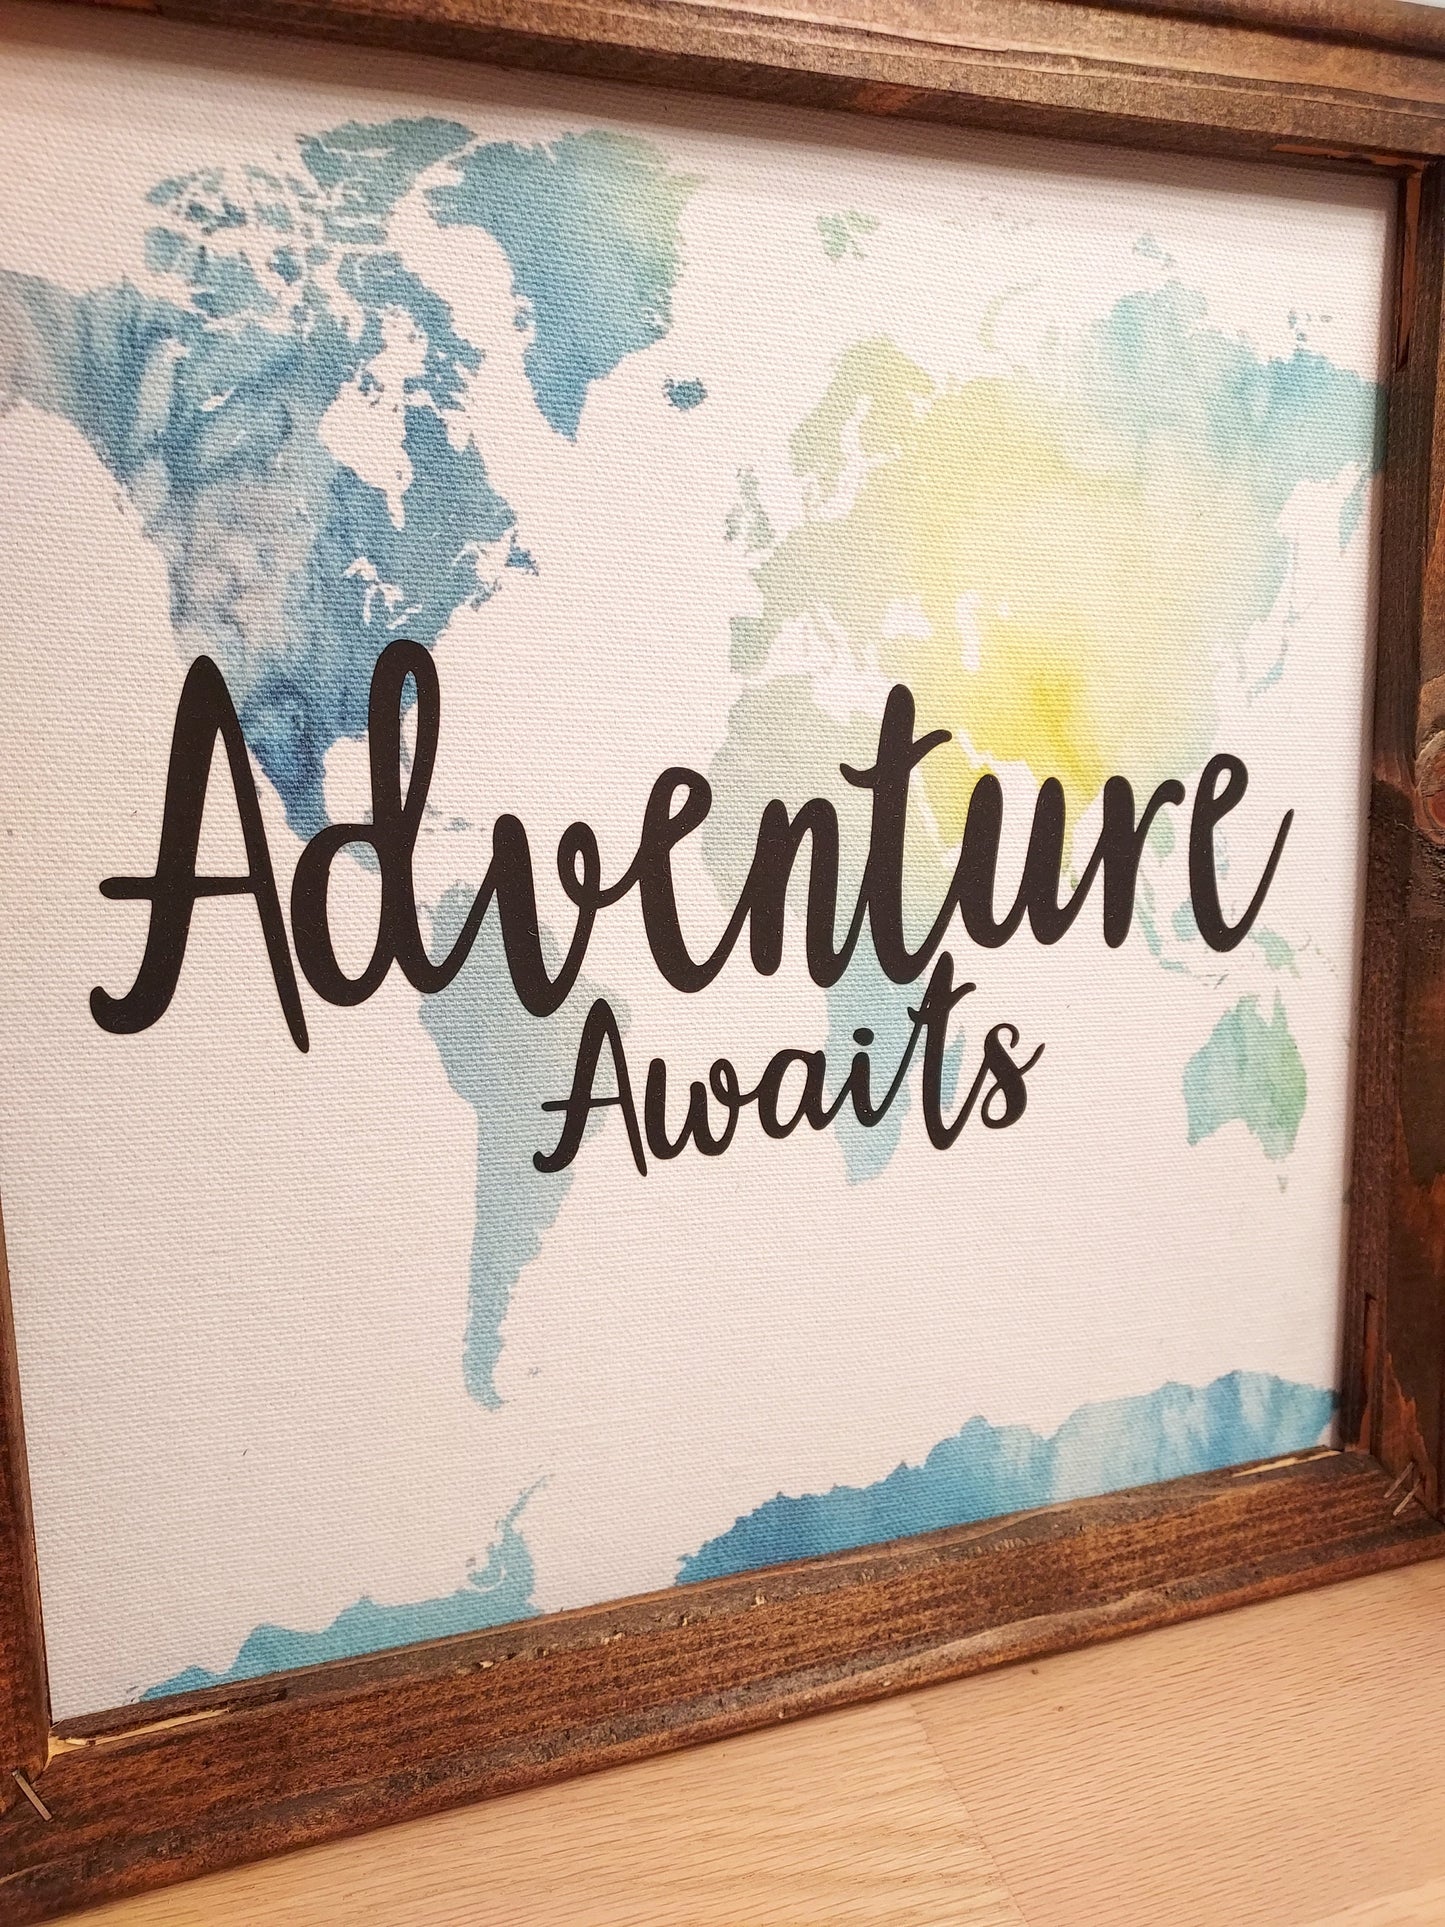 Adventure Awaits framed 12x12 Canvas Sign/World Traveler/Resolution reminder/Wanderer/Apartment decor/Graduate gift